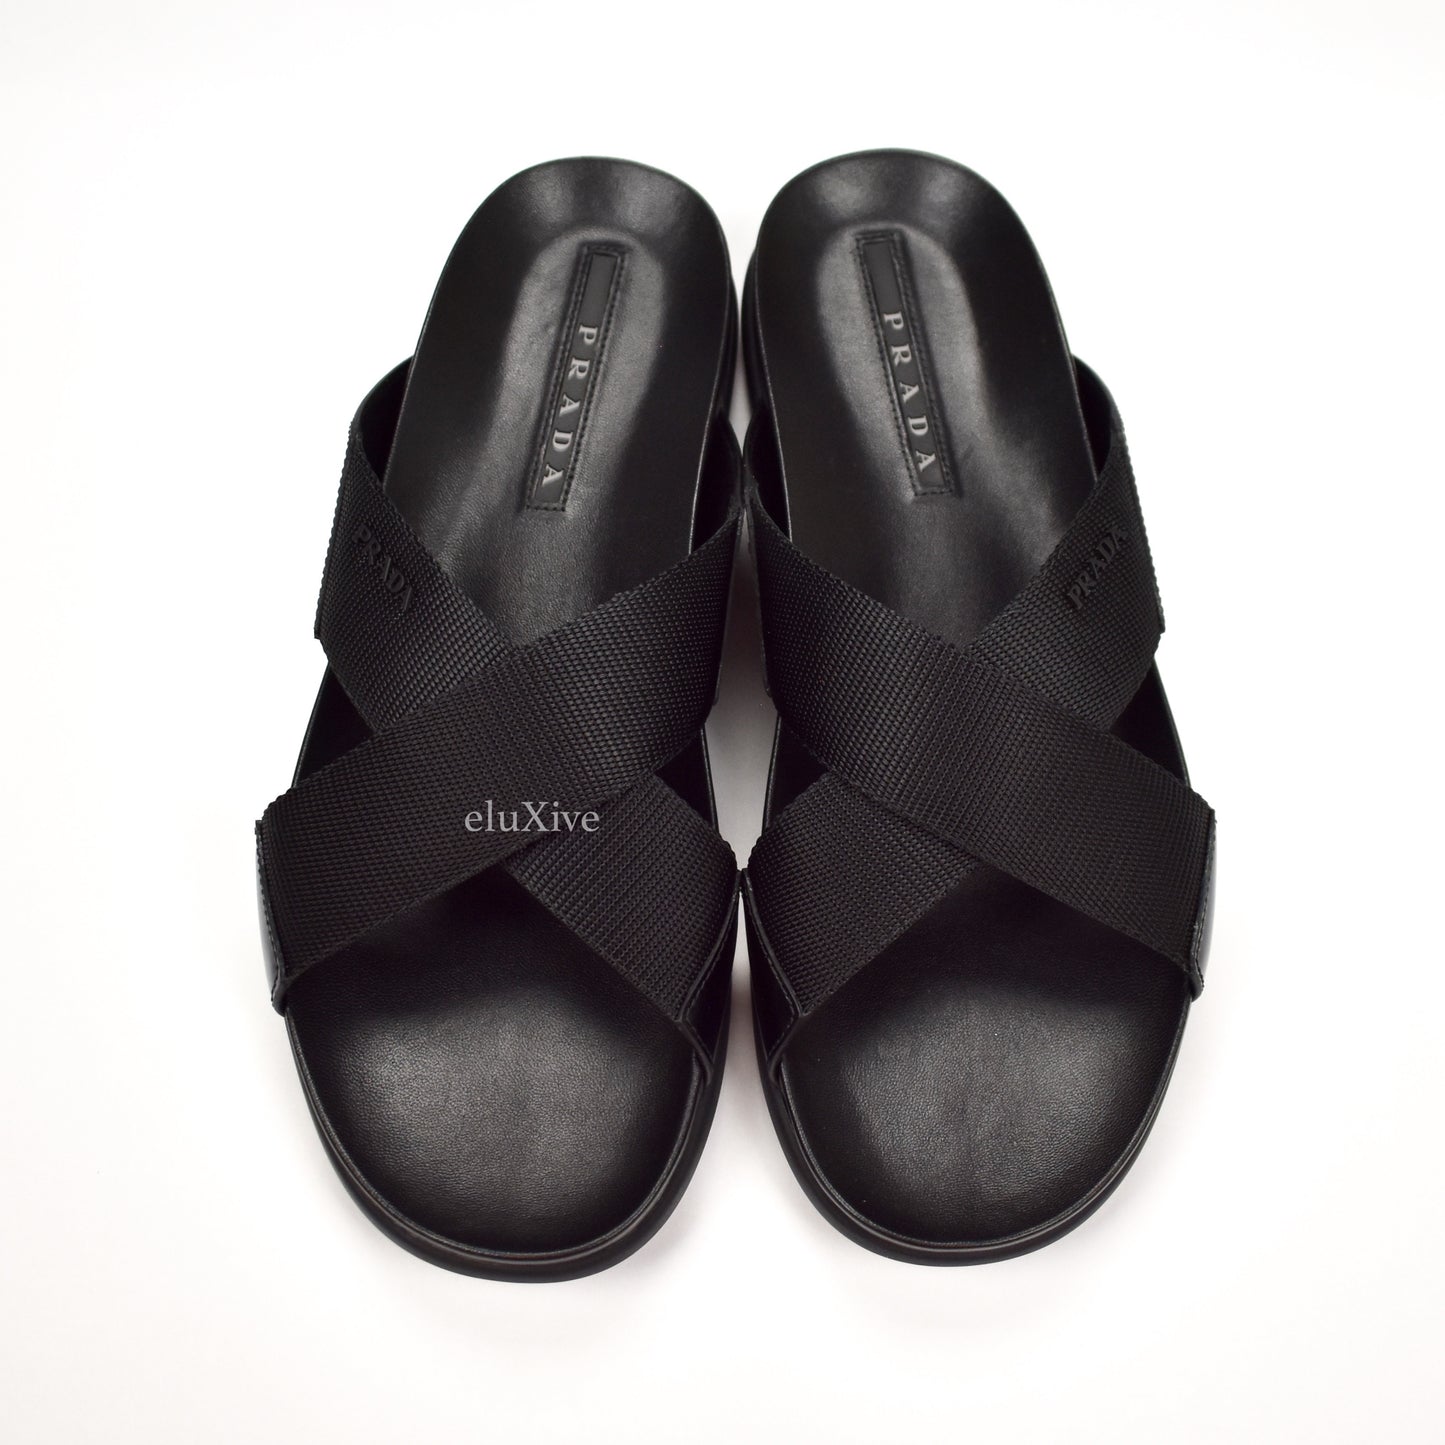 Prada - Black Leather Web Strap Sandals